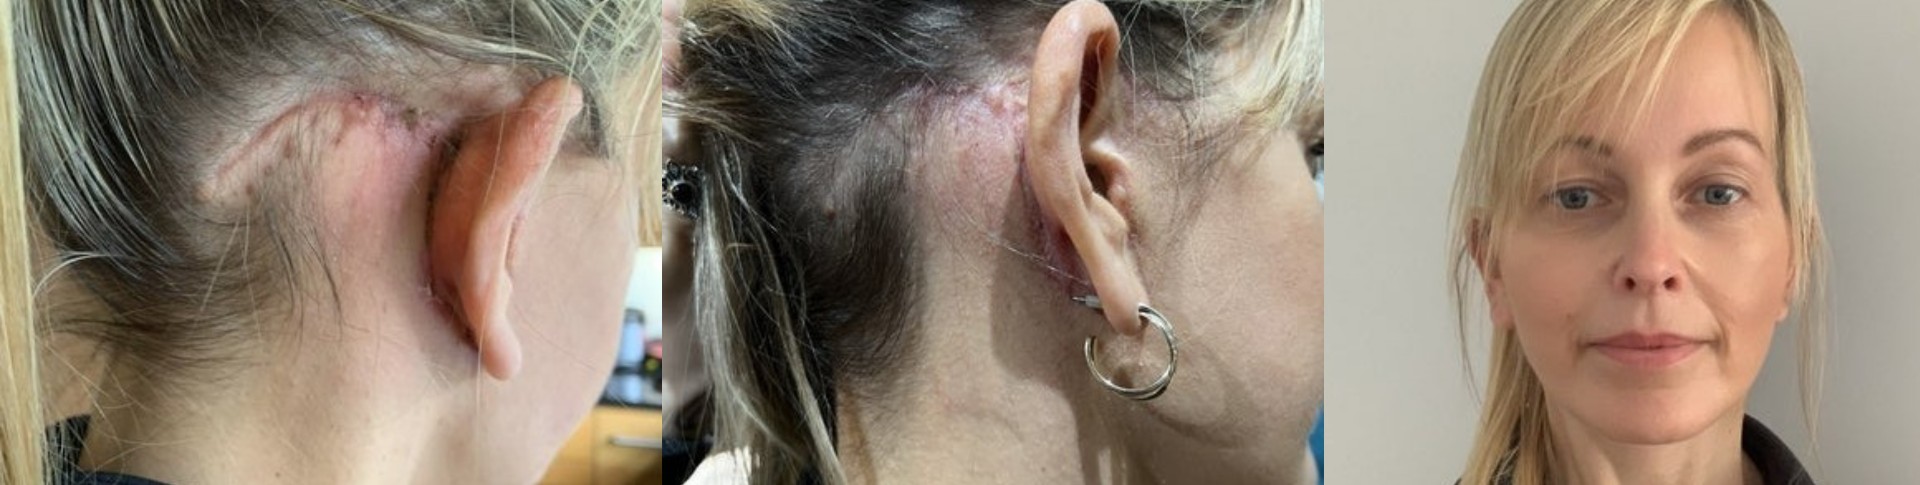 Scar healing behind ear after facelift surgery